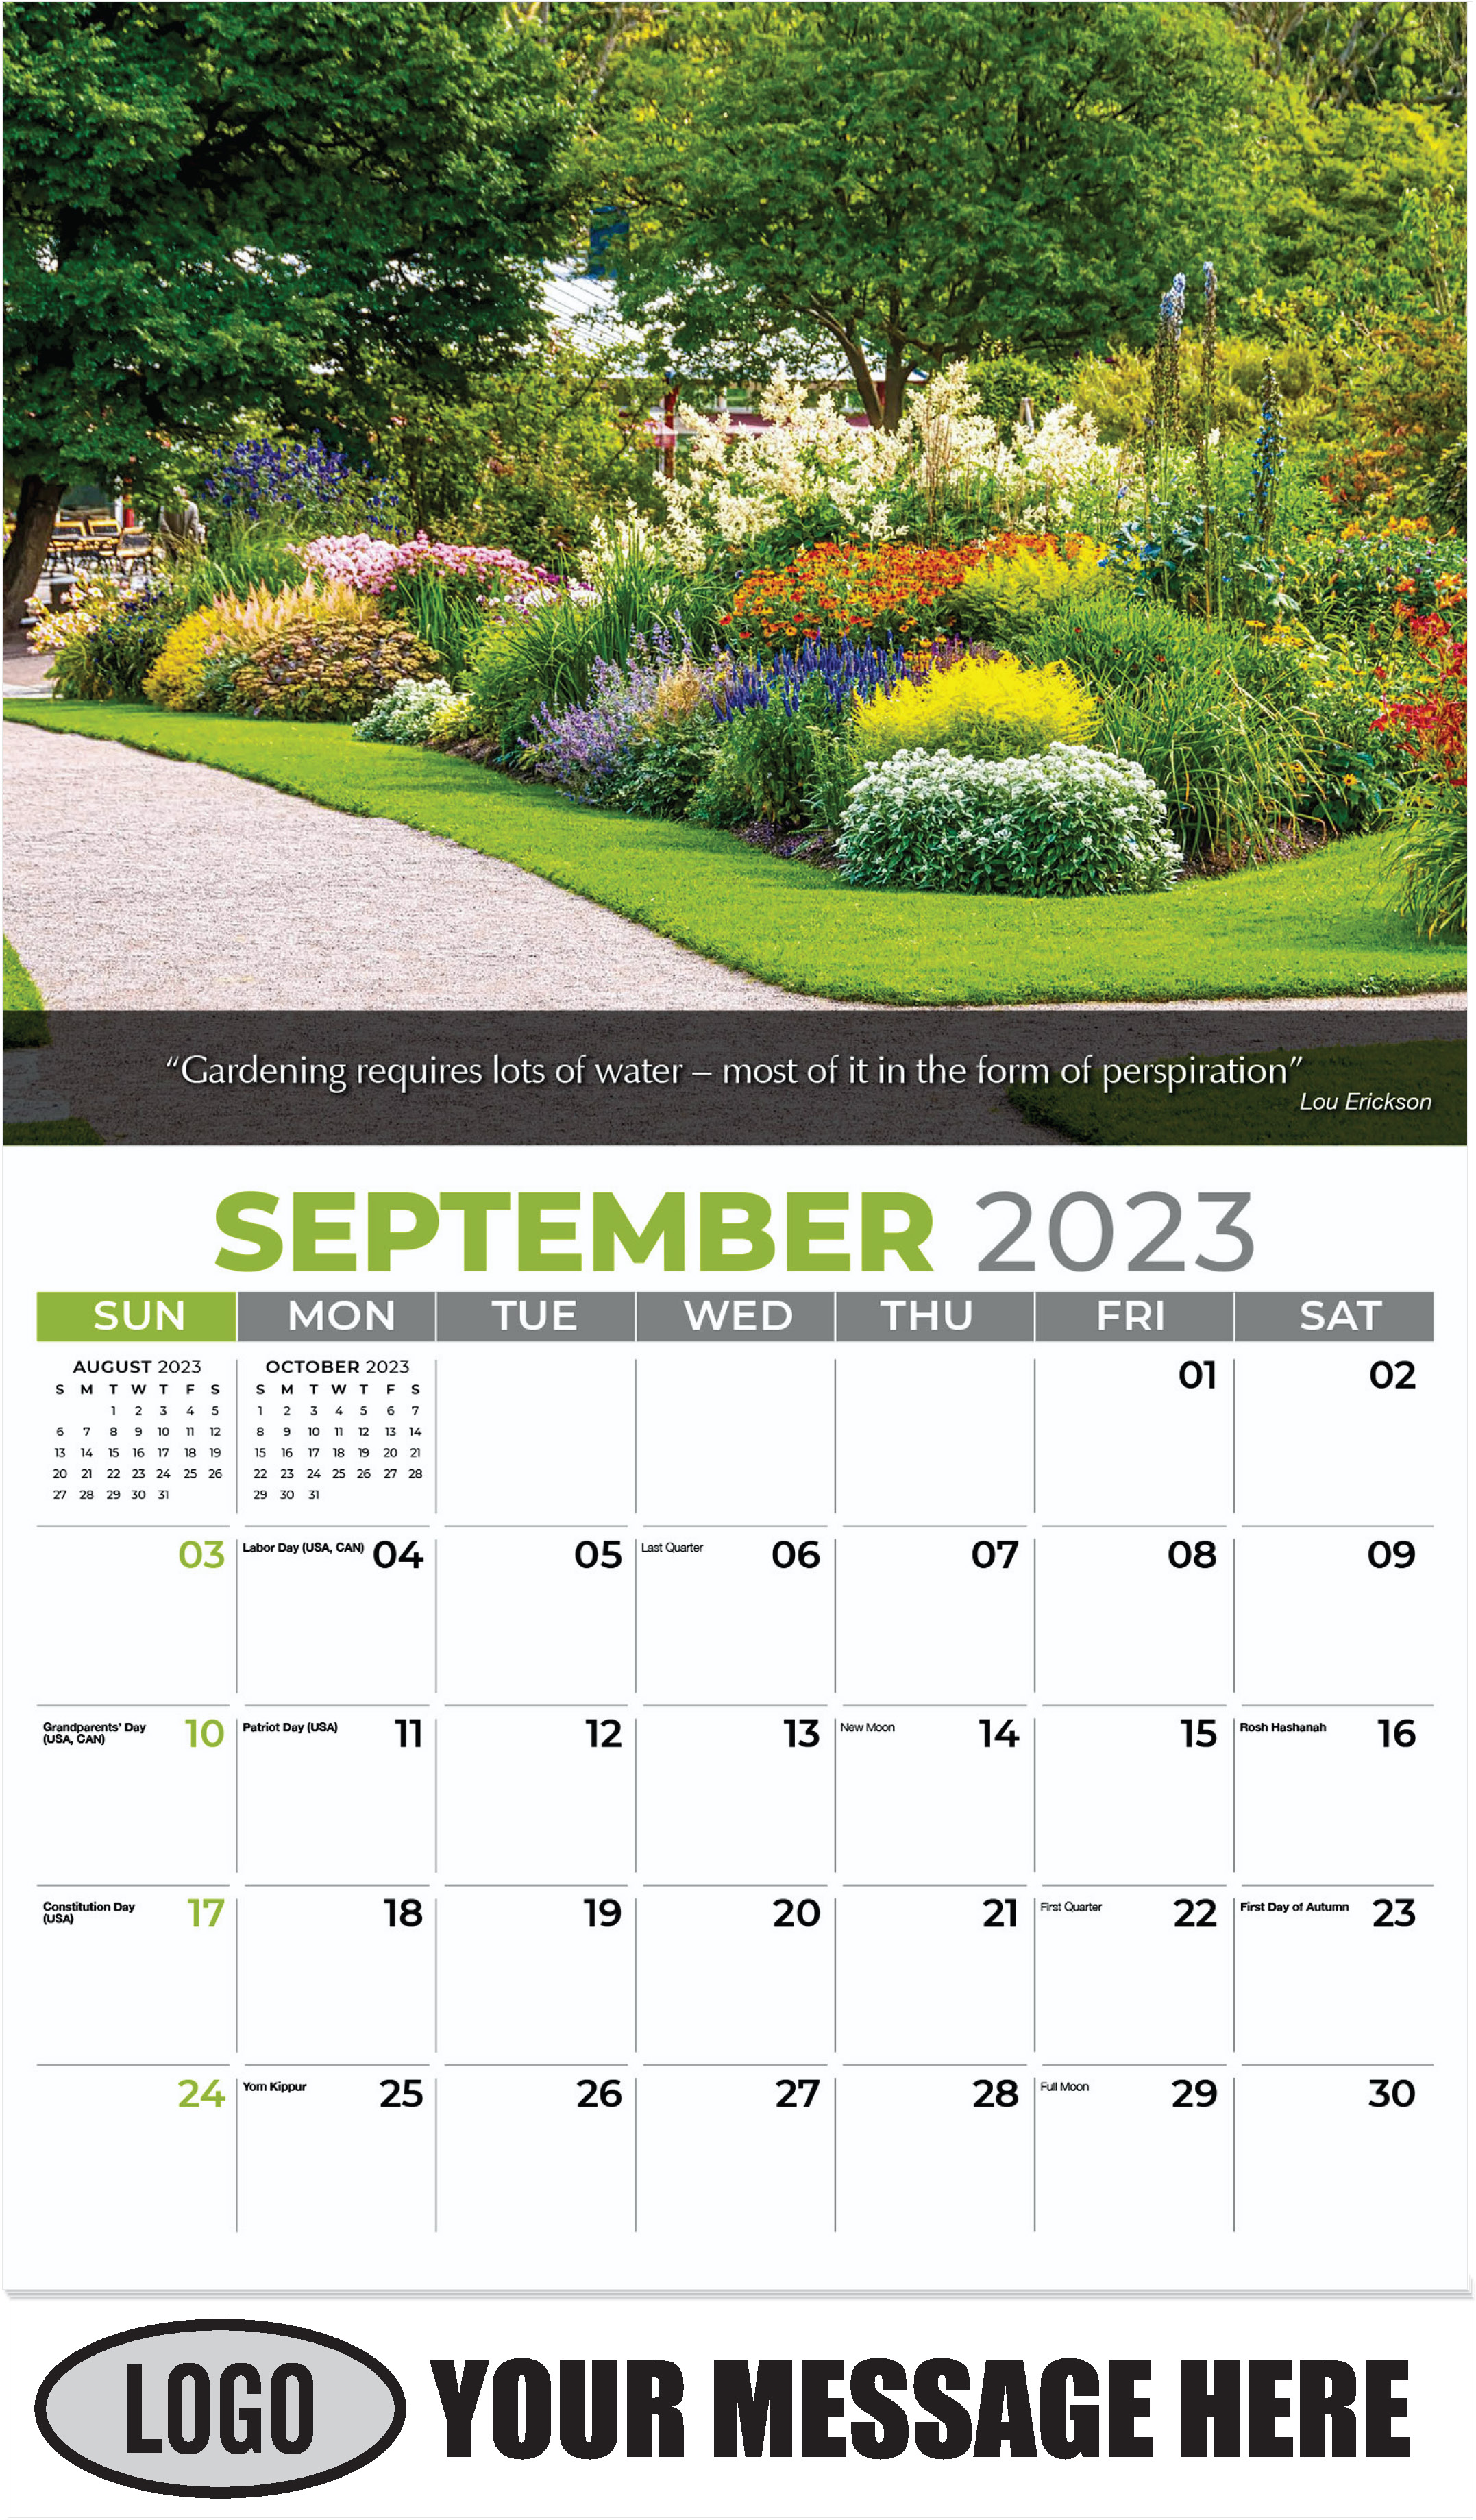 Lush Summer Garden - September - Flowers & Gardens 2023 Promotional Calendar